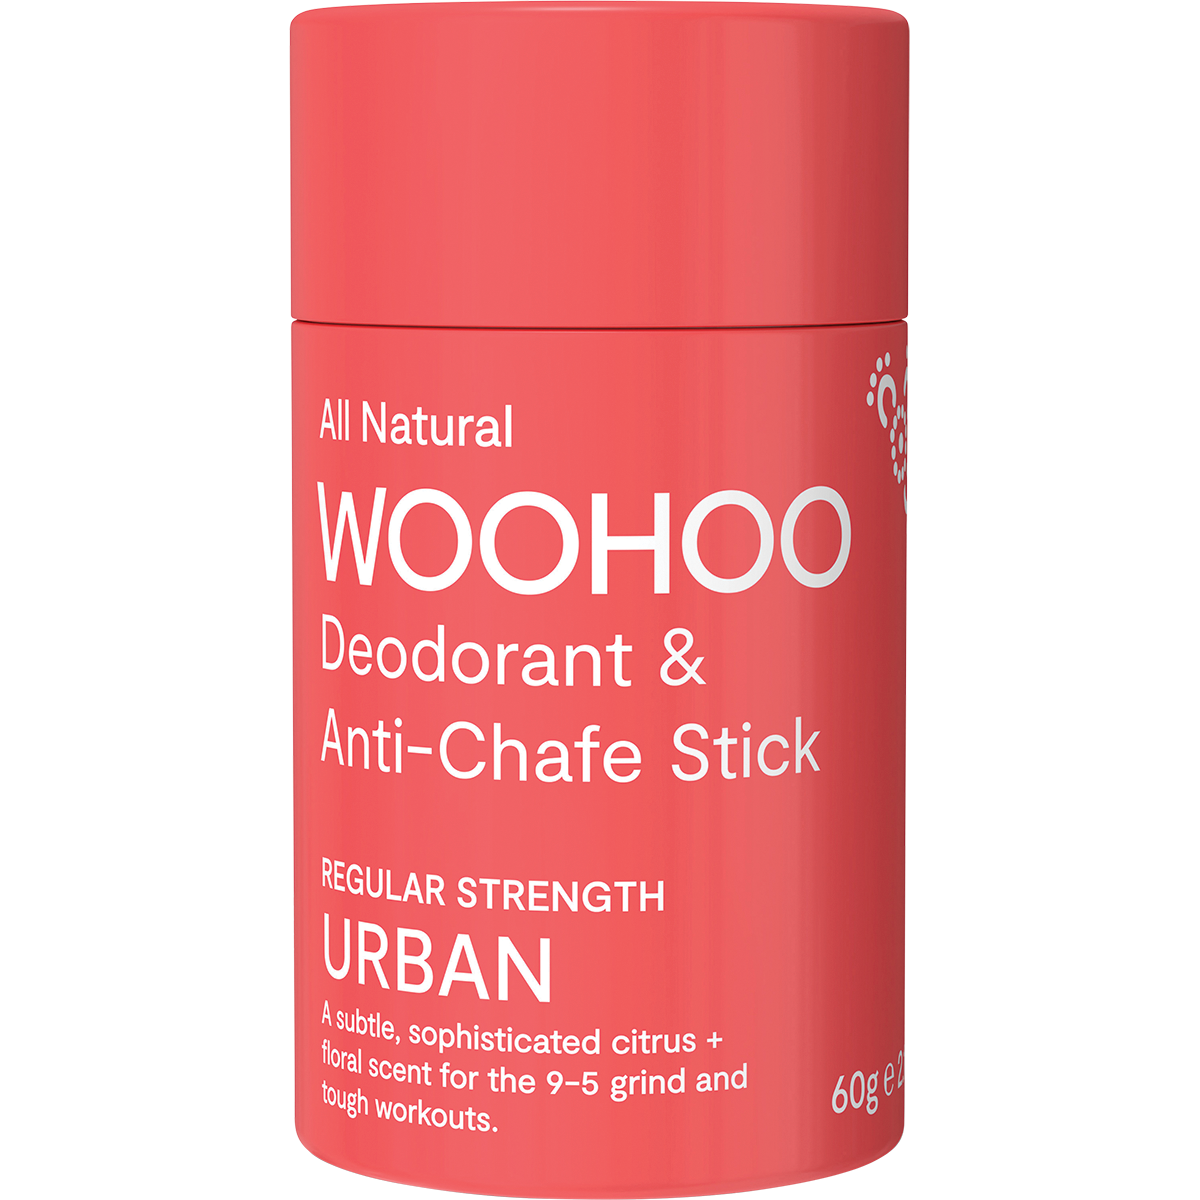 Woohoo Natural Deodorant & Anti-Chafe Stick - Urban  60g